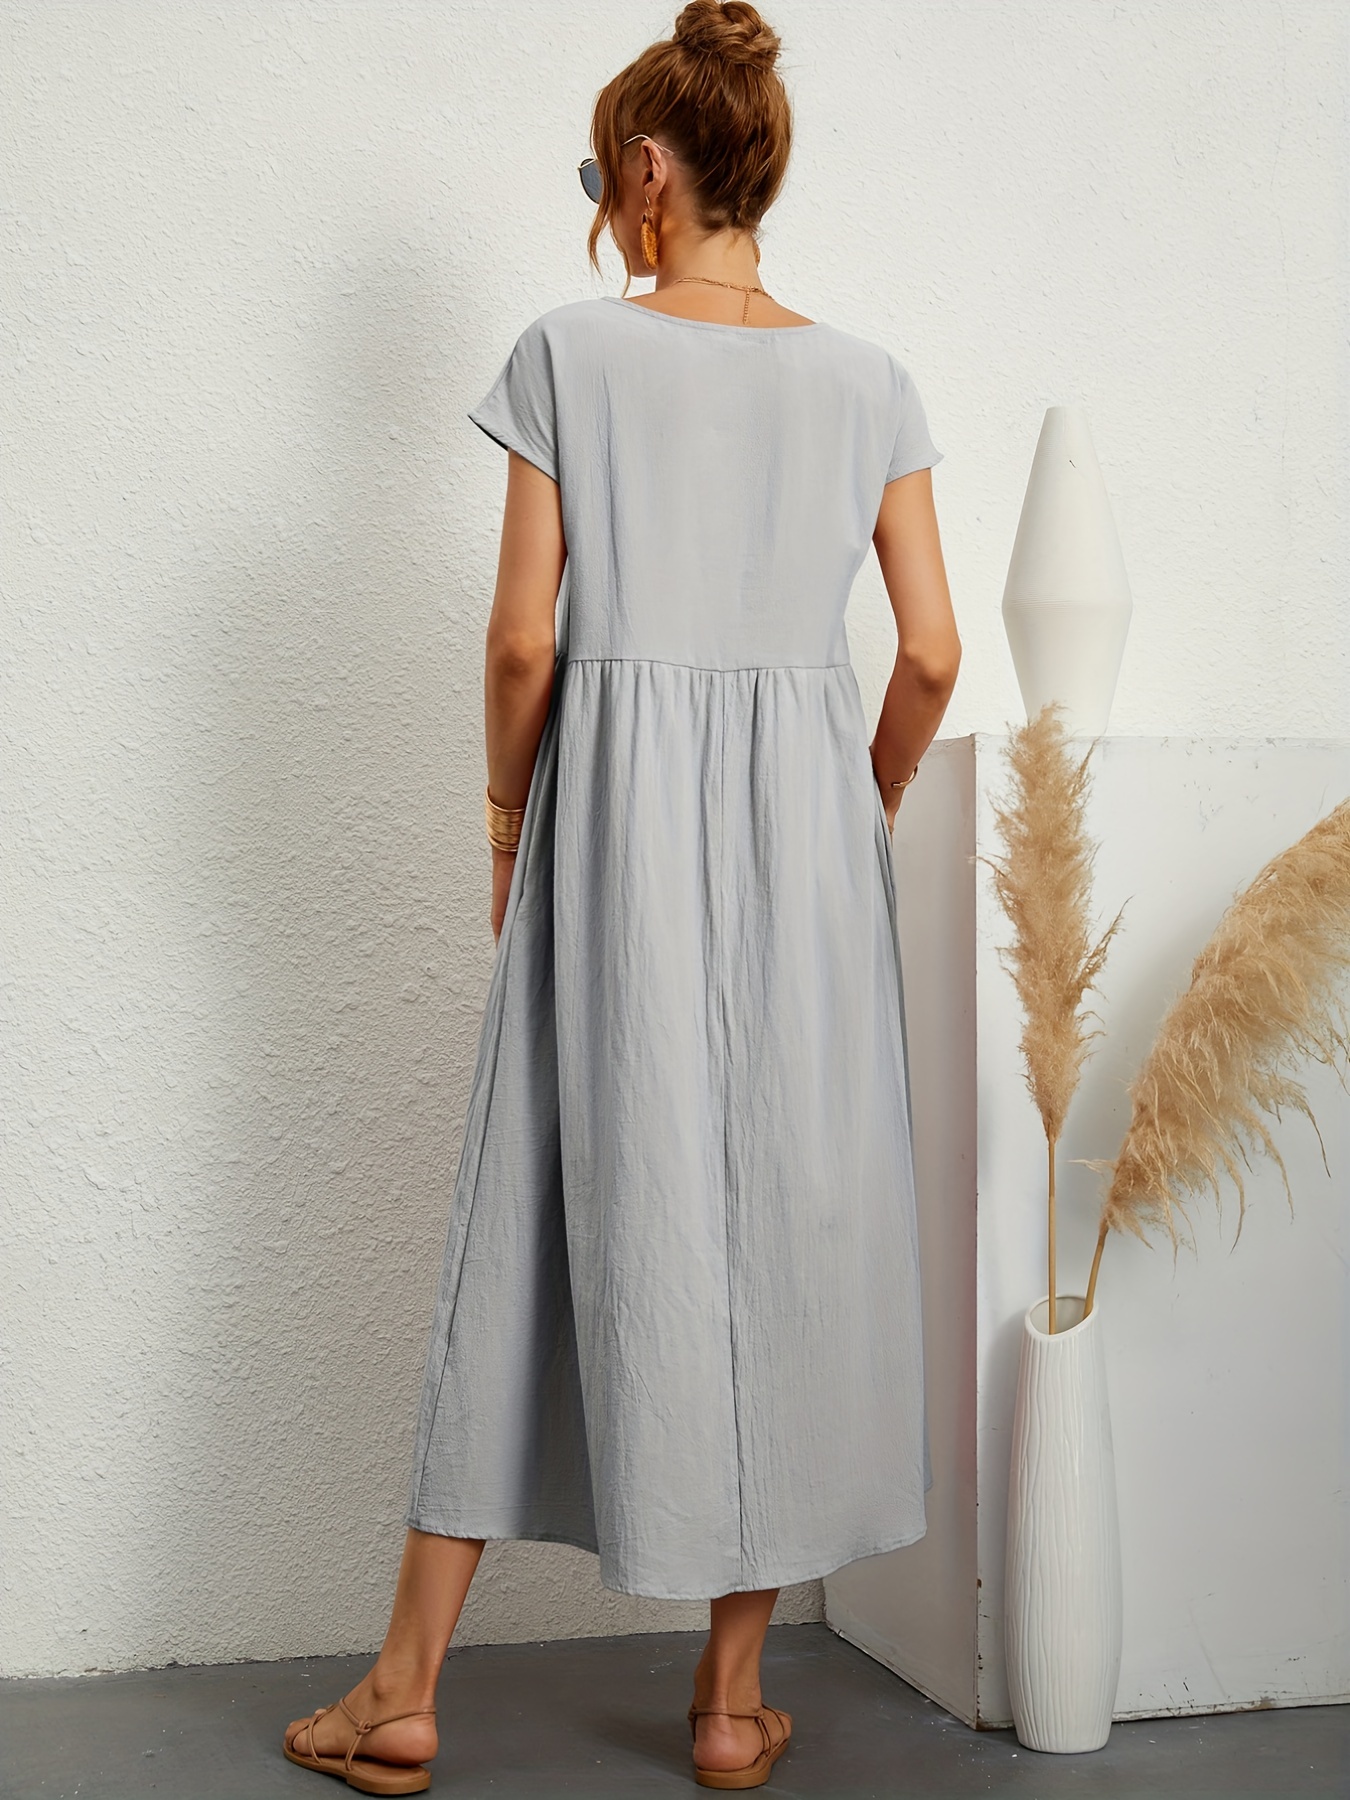 Olive & Oak Womens Solid Ribbed Short Sleeve Drawstring Dress Heather Grey  Small